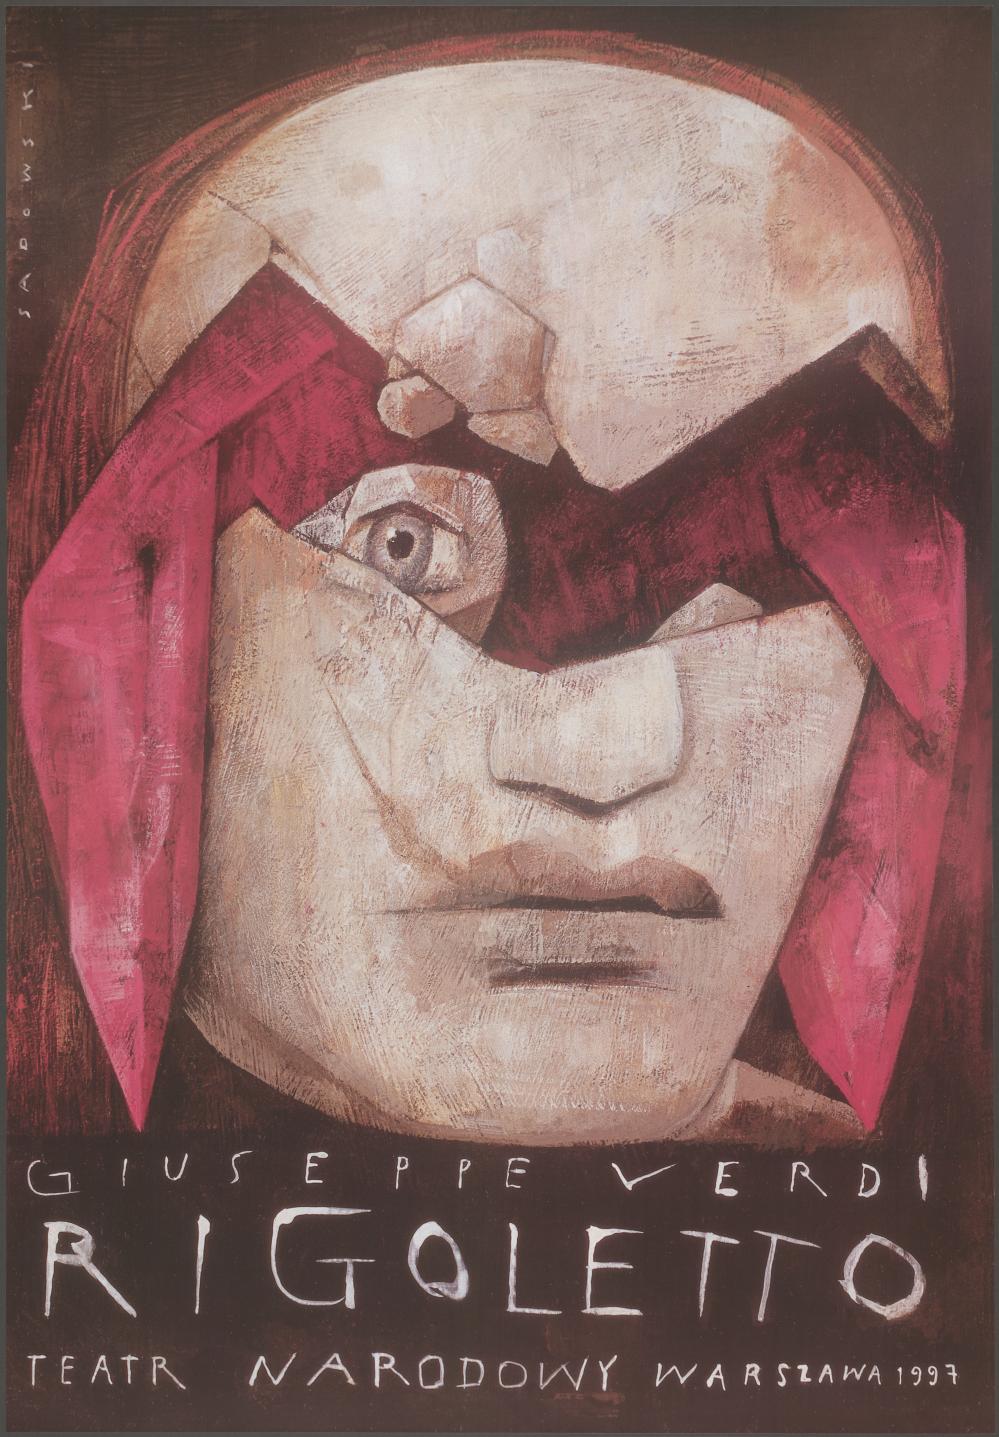 Plakat „Rigoletto” Giuseppe Verdi 12-03-1997